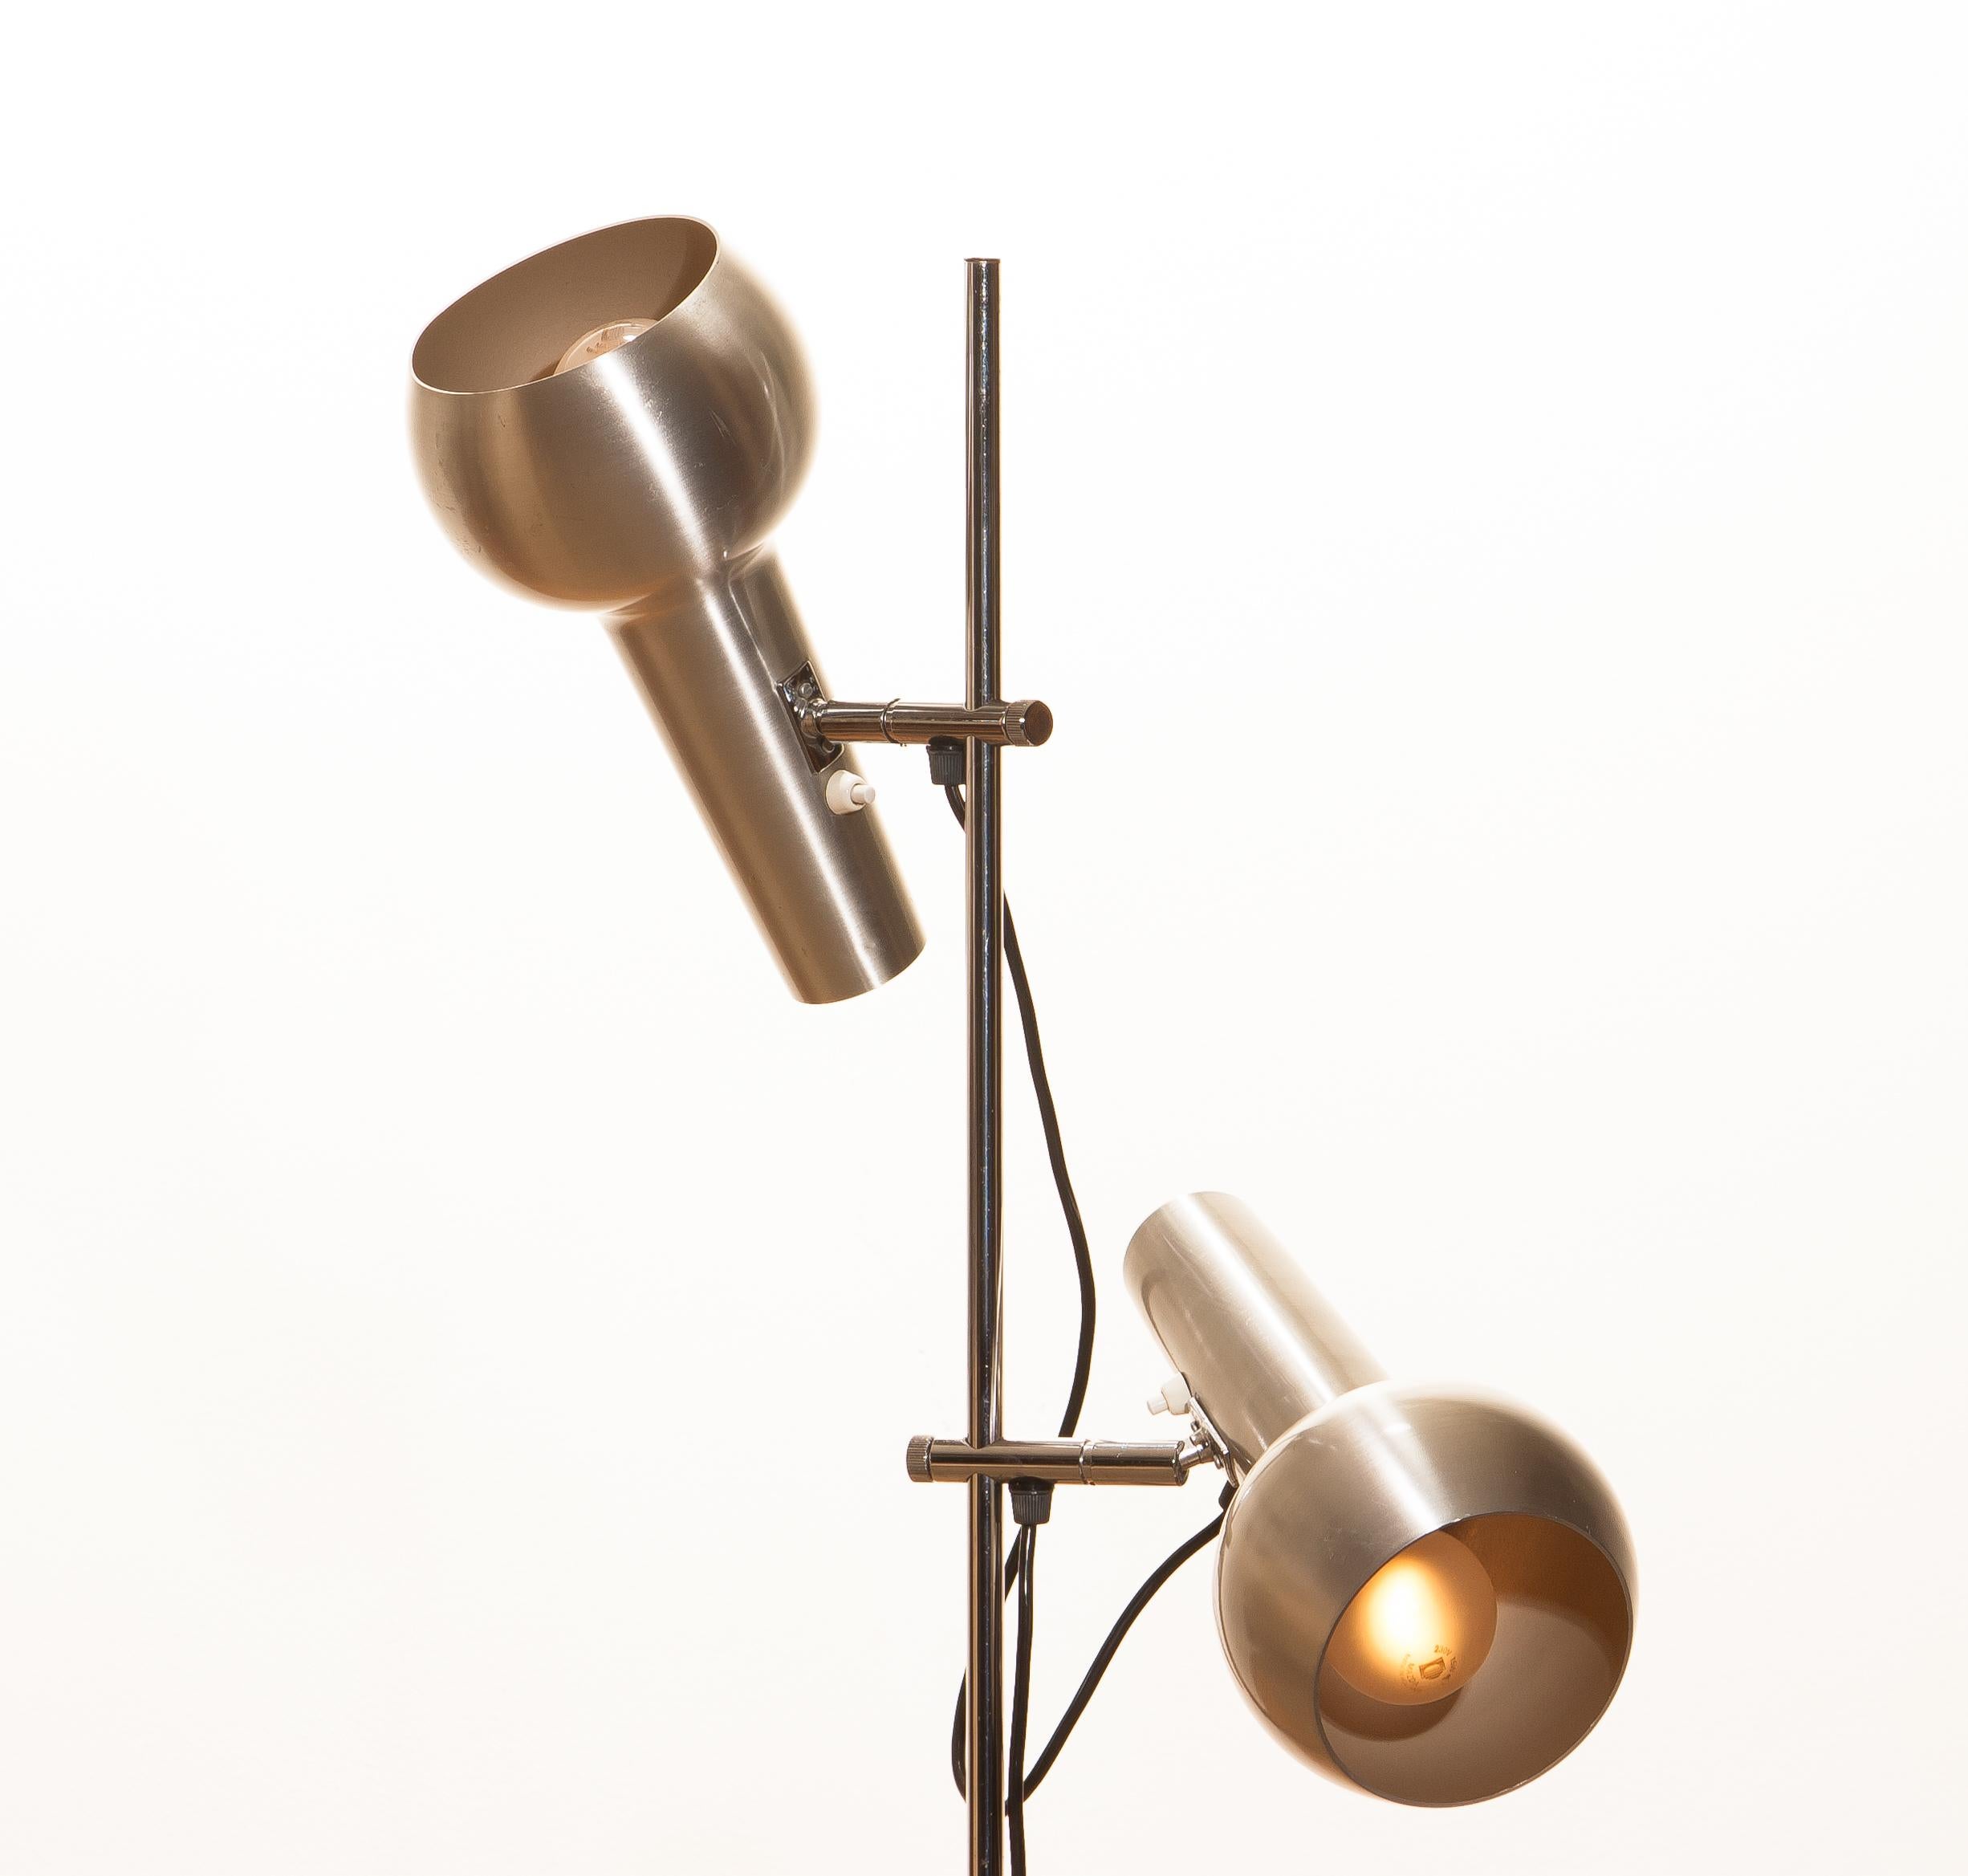 1970s, Chrome and Aluminium Double Shade Floor Lamp by Koch & Lowy (Ende des 20. Jahrhunderts)